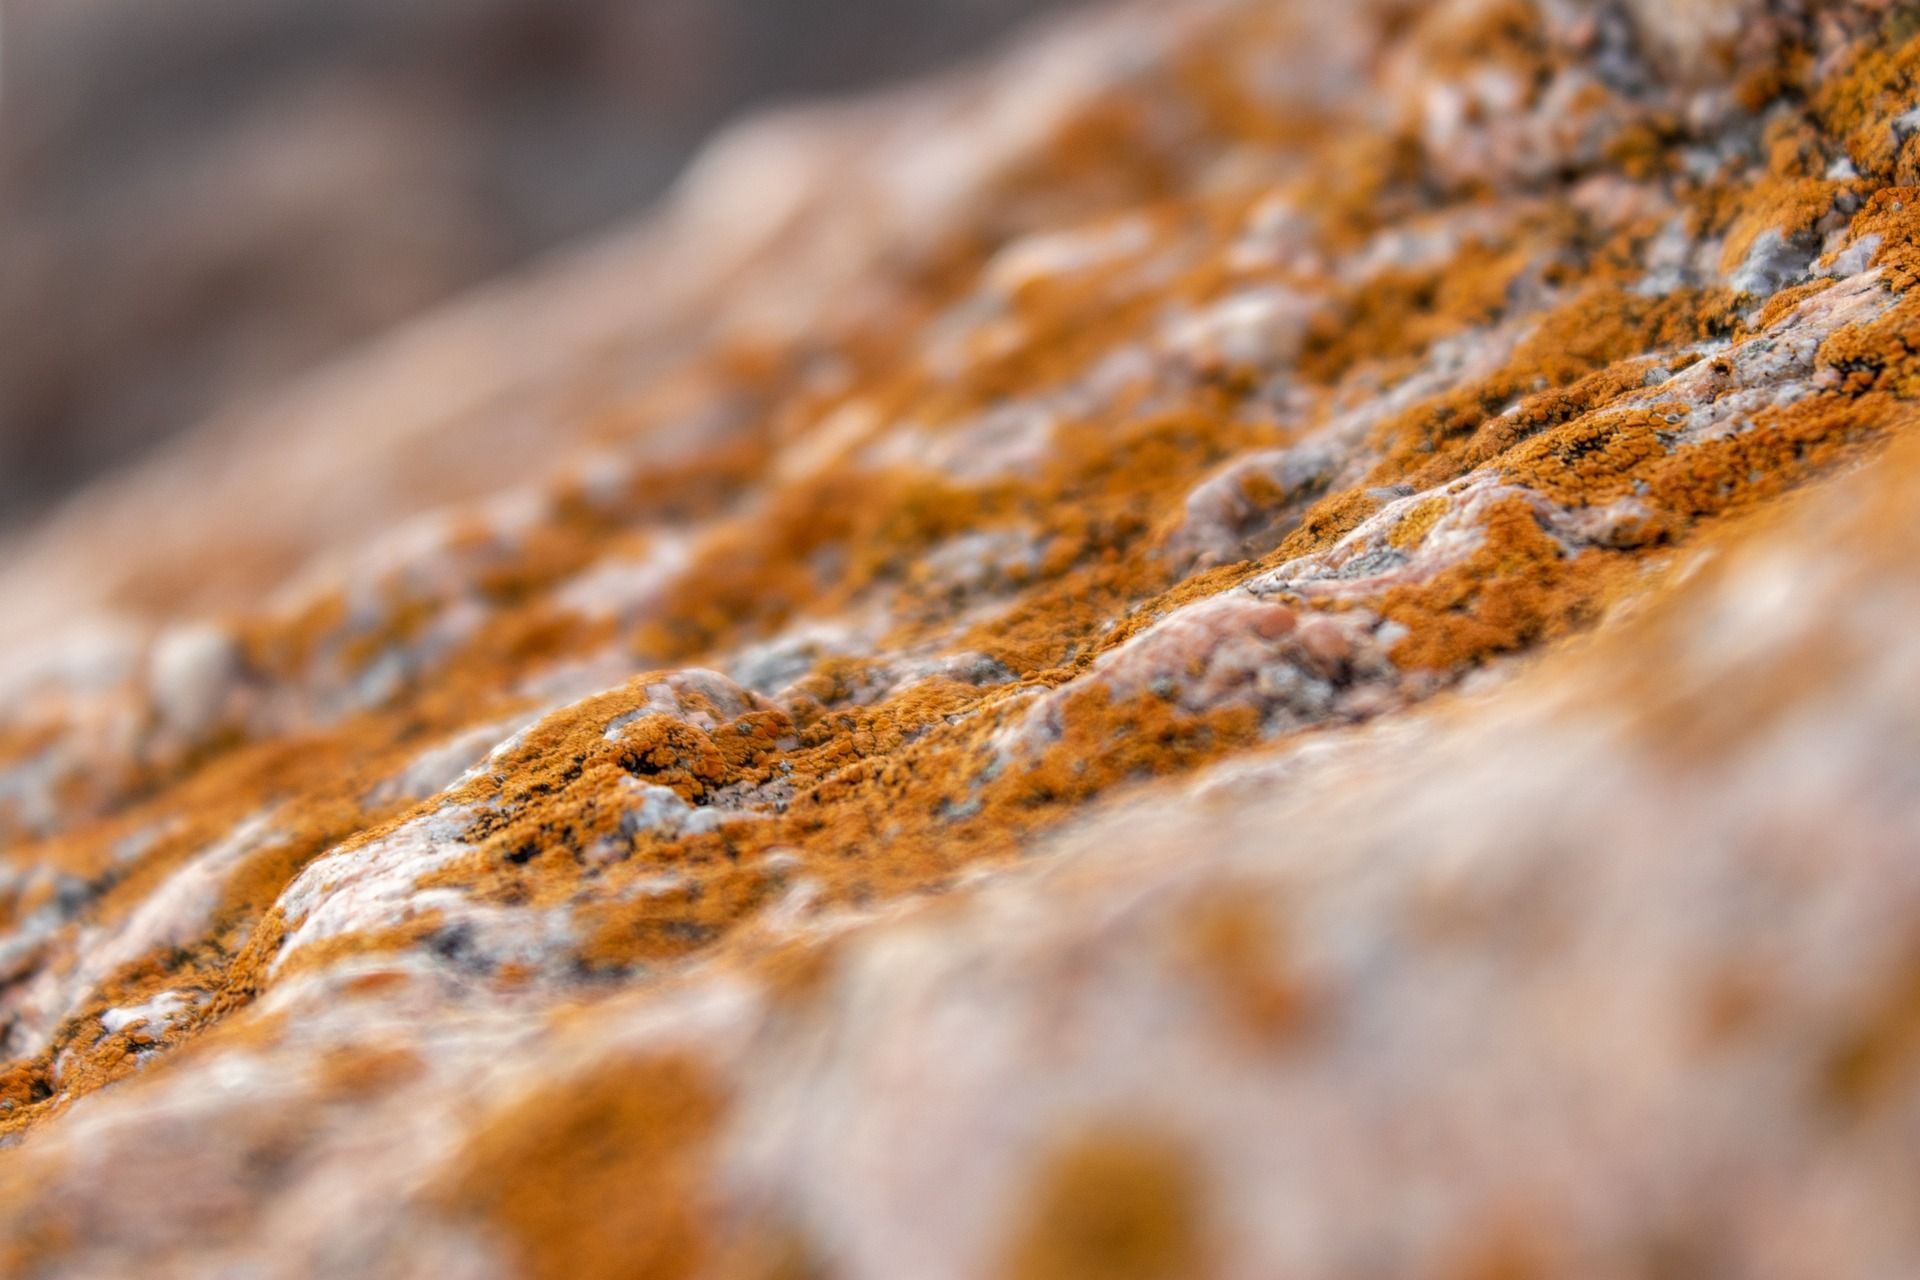 A close up image of orange mold.